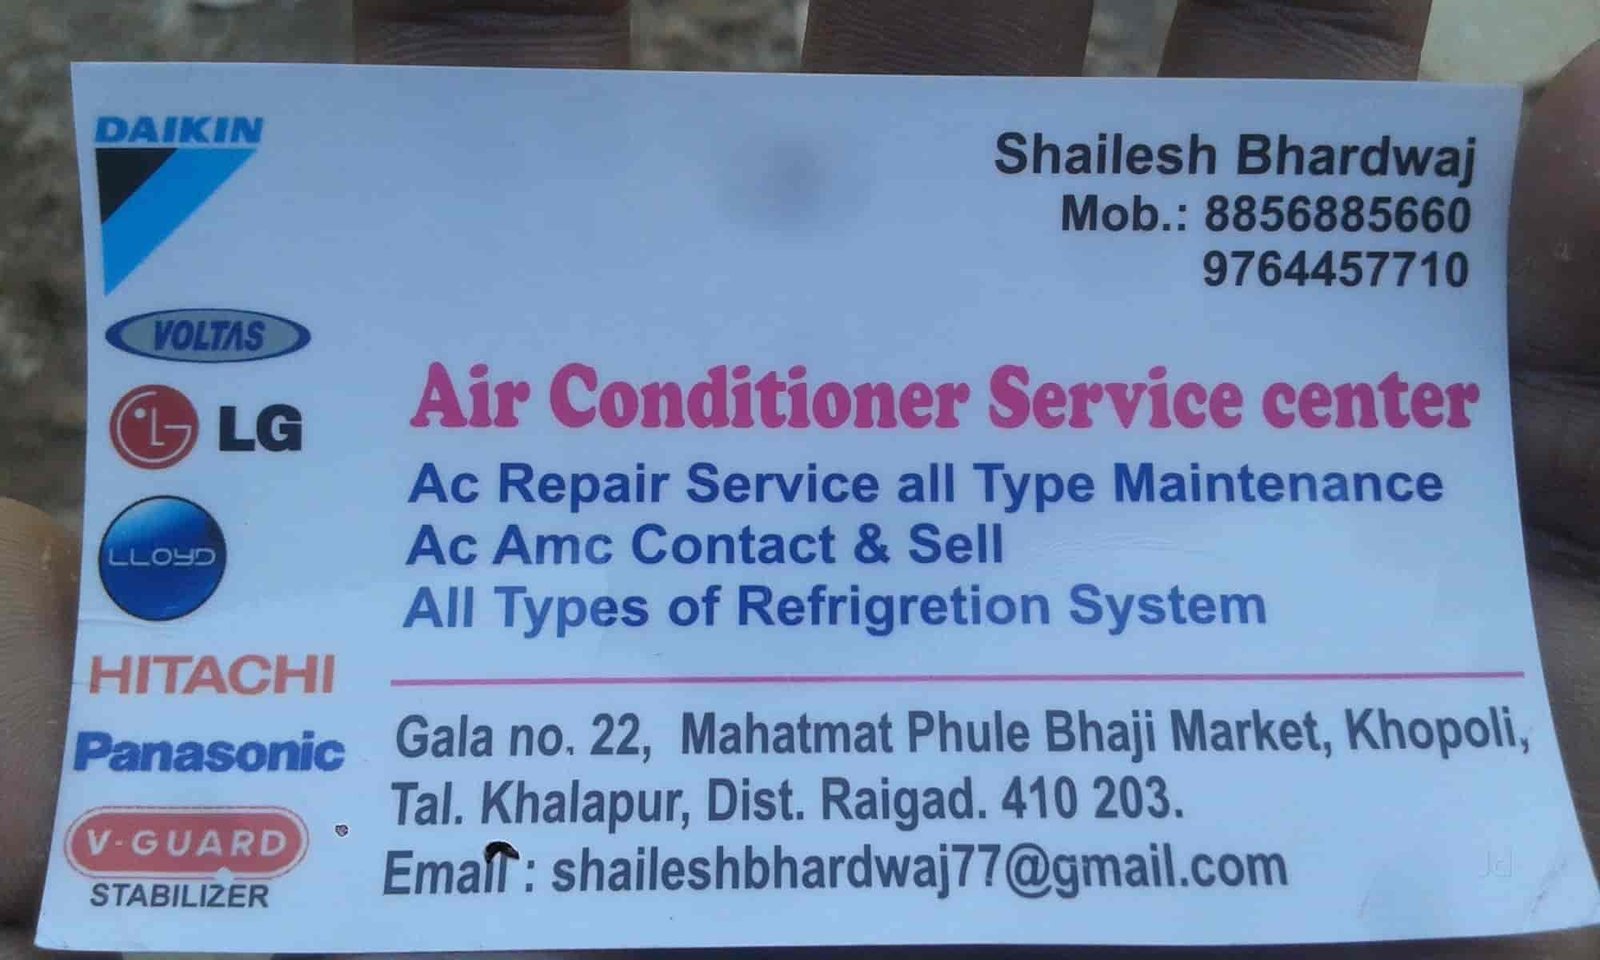 Air Conditioner Service Center